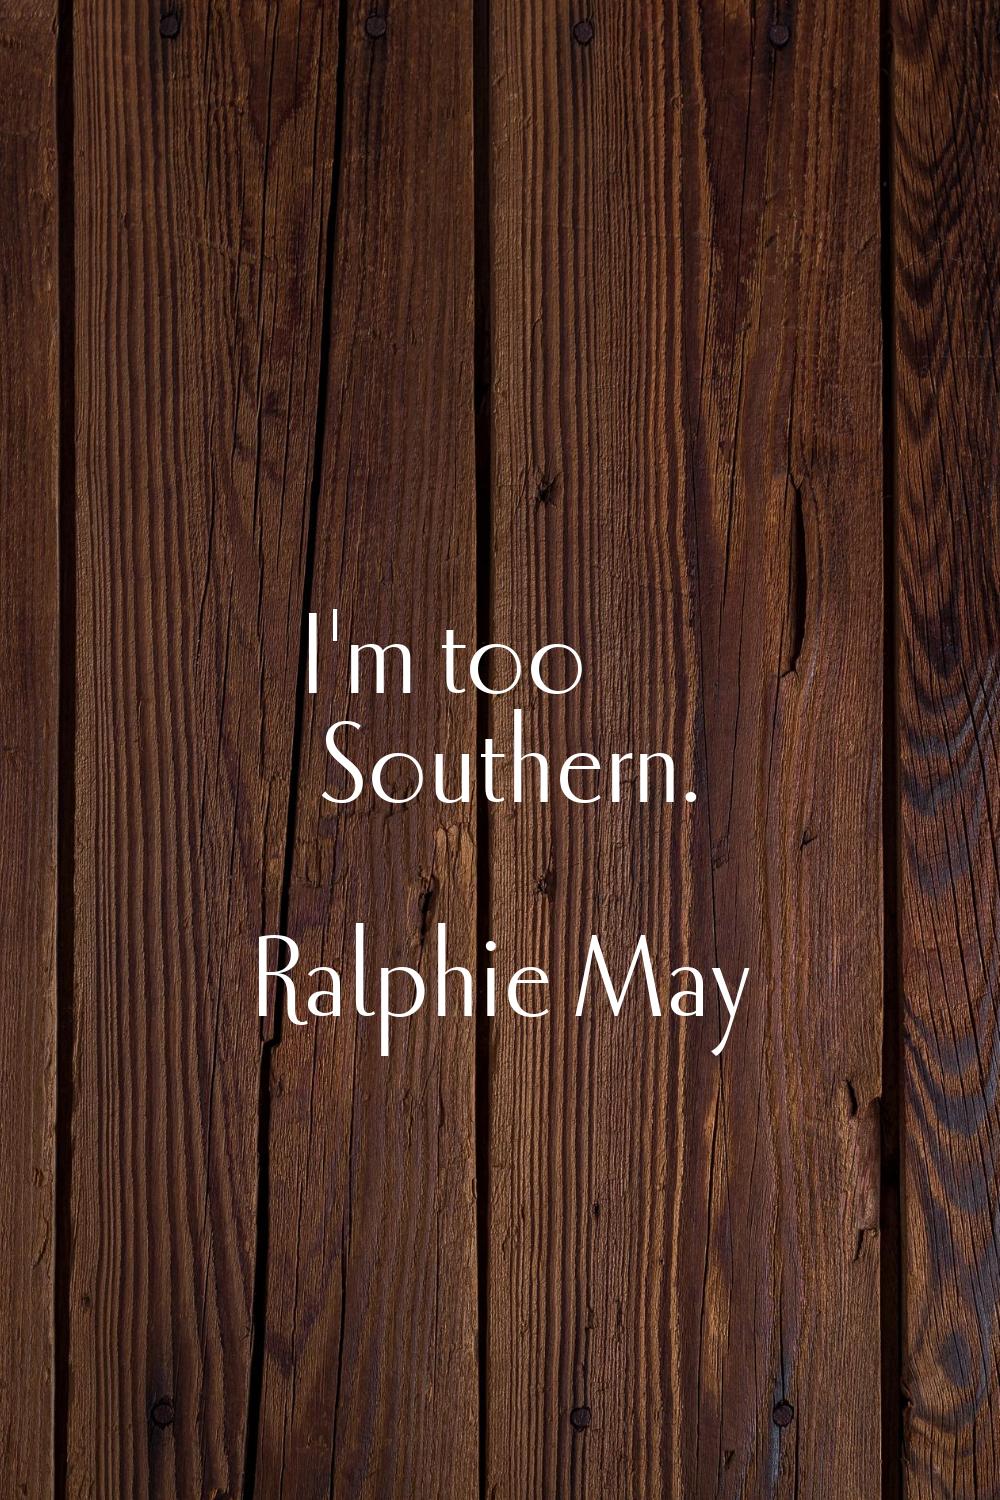 I'm too Southern.